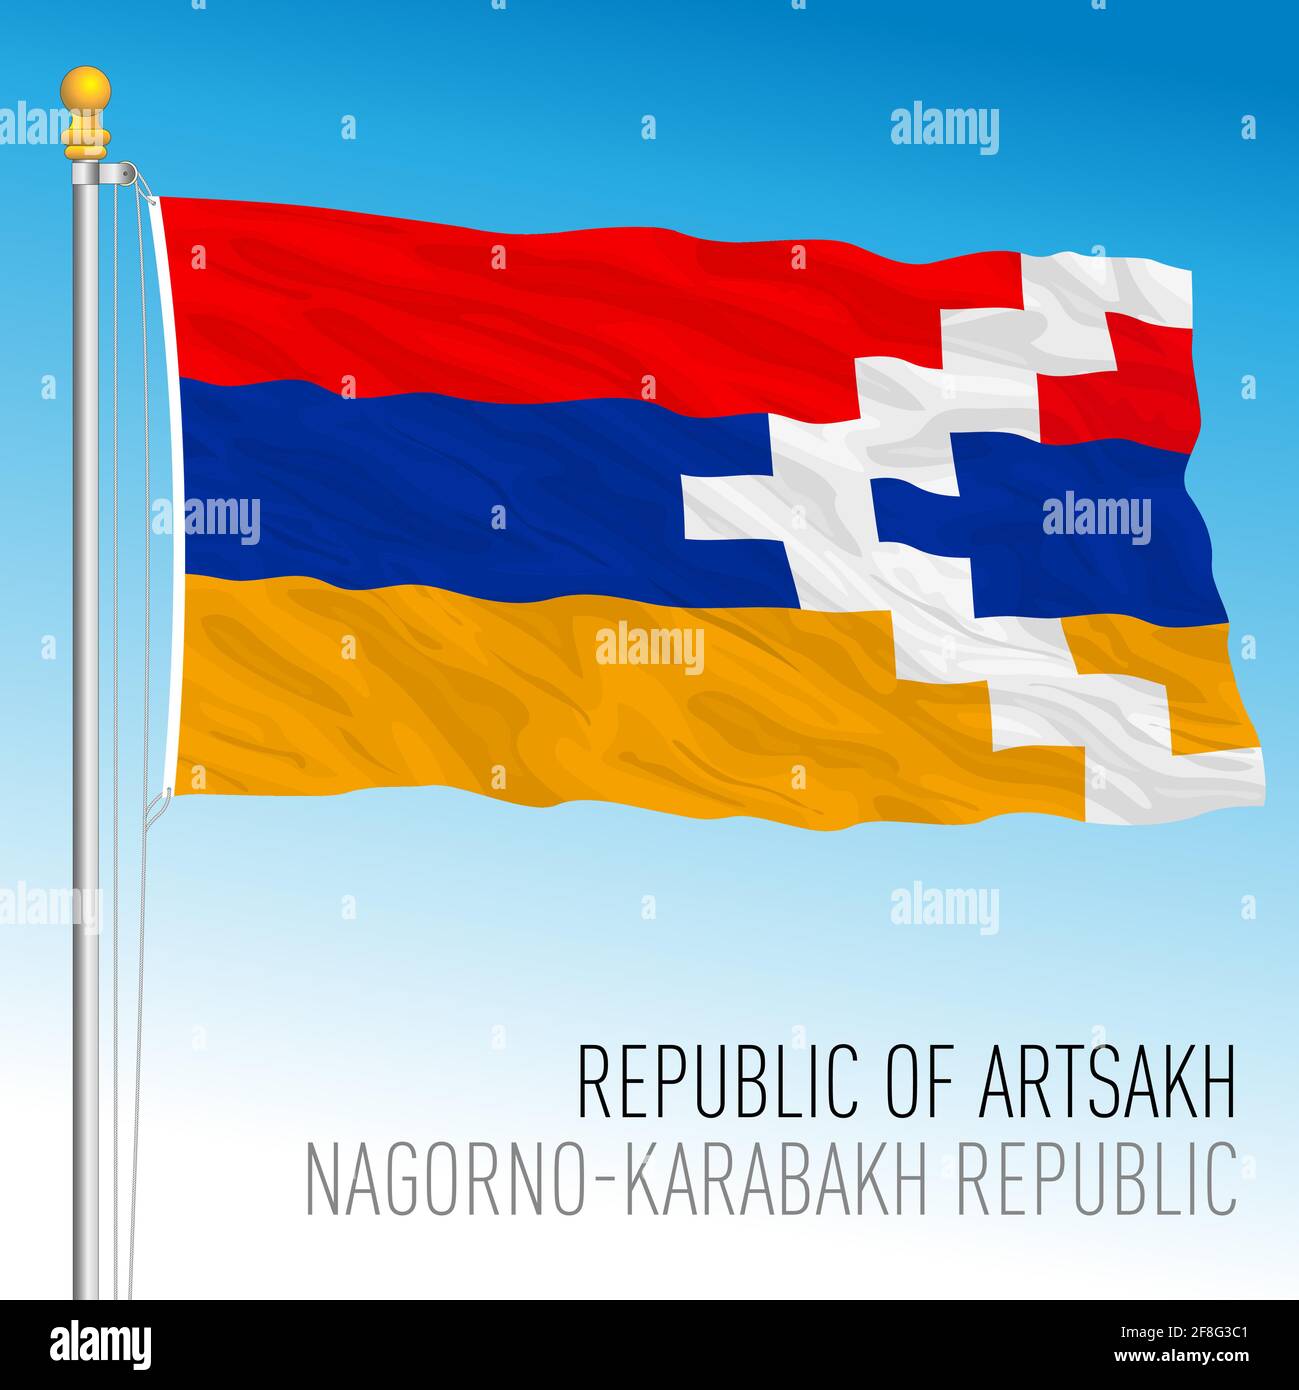 Artsakh Nagorno Karabakh Republic flag, Armenia, vector illustration Stock Vector